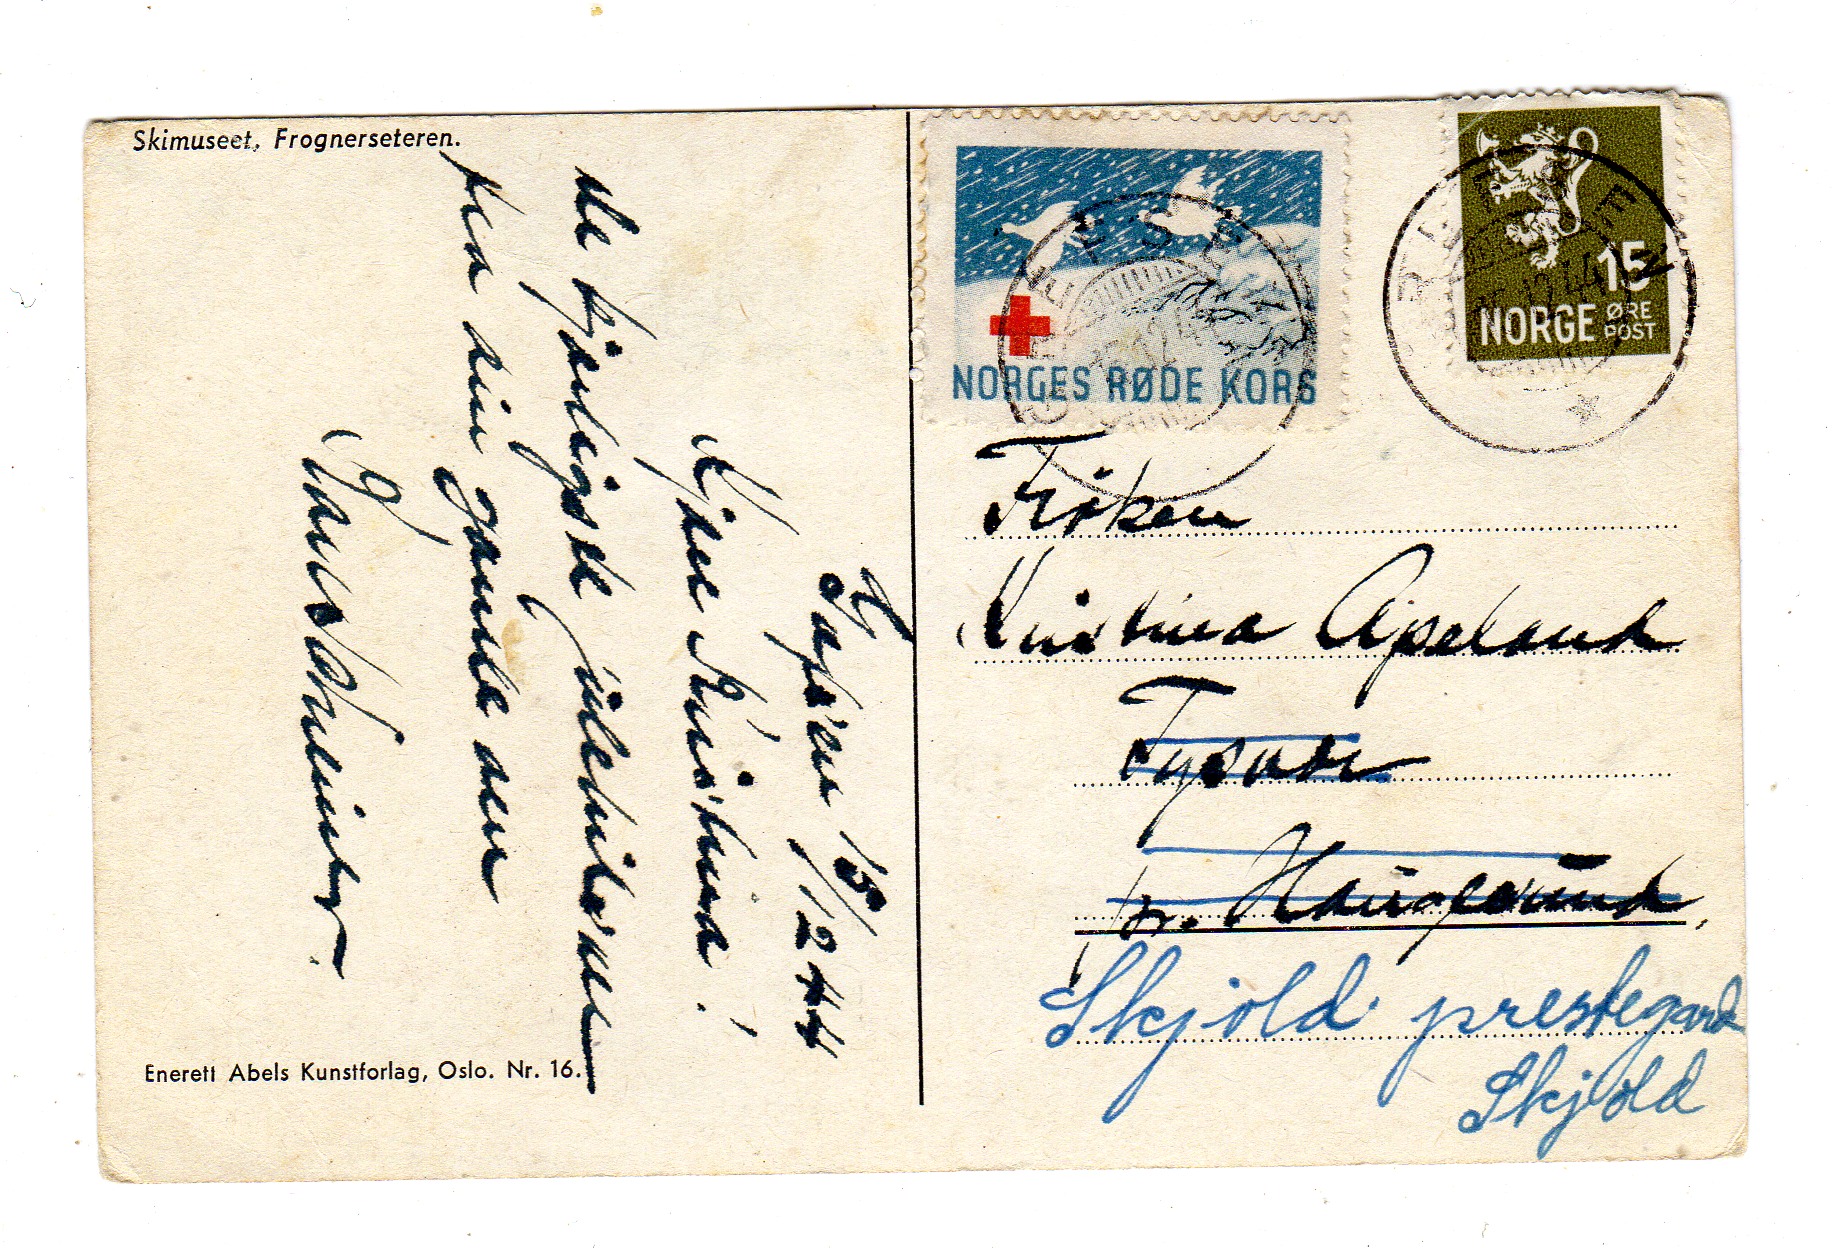 Skimuseet Frogner seteren Abel nr 16 st 1944